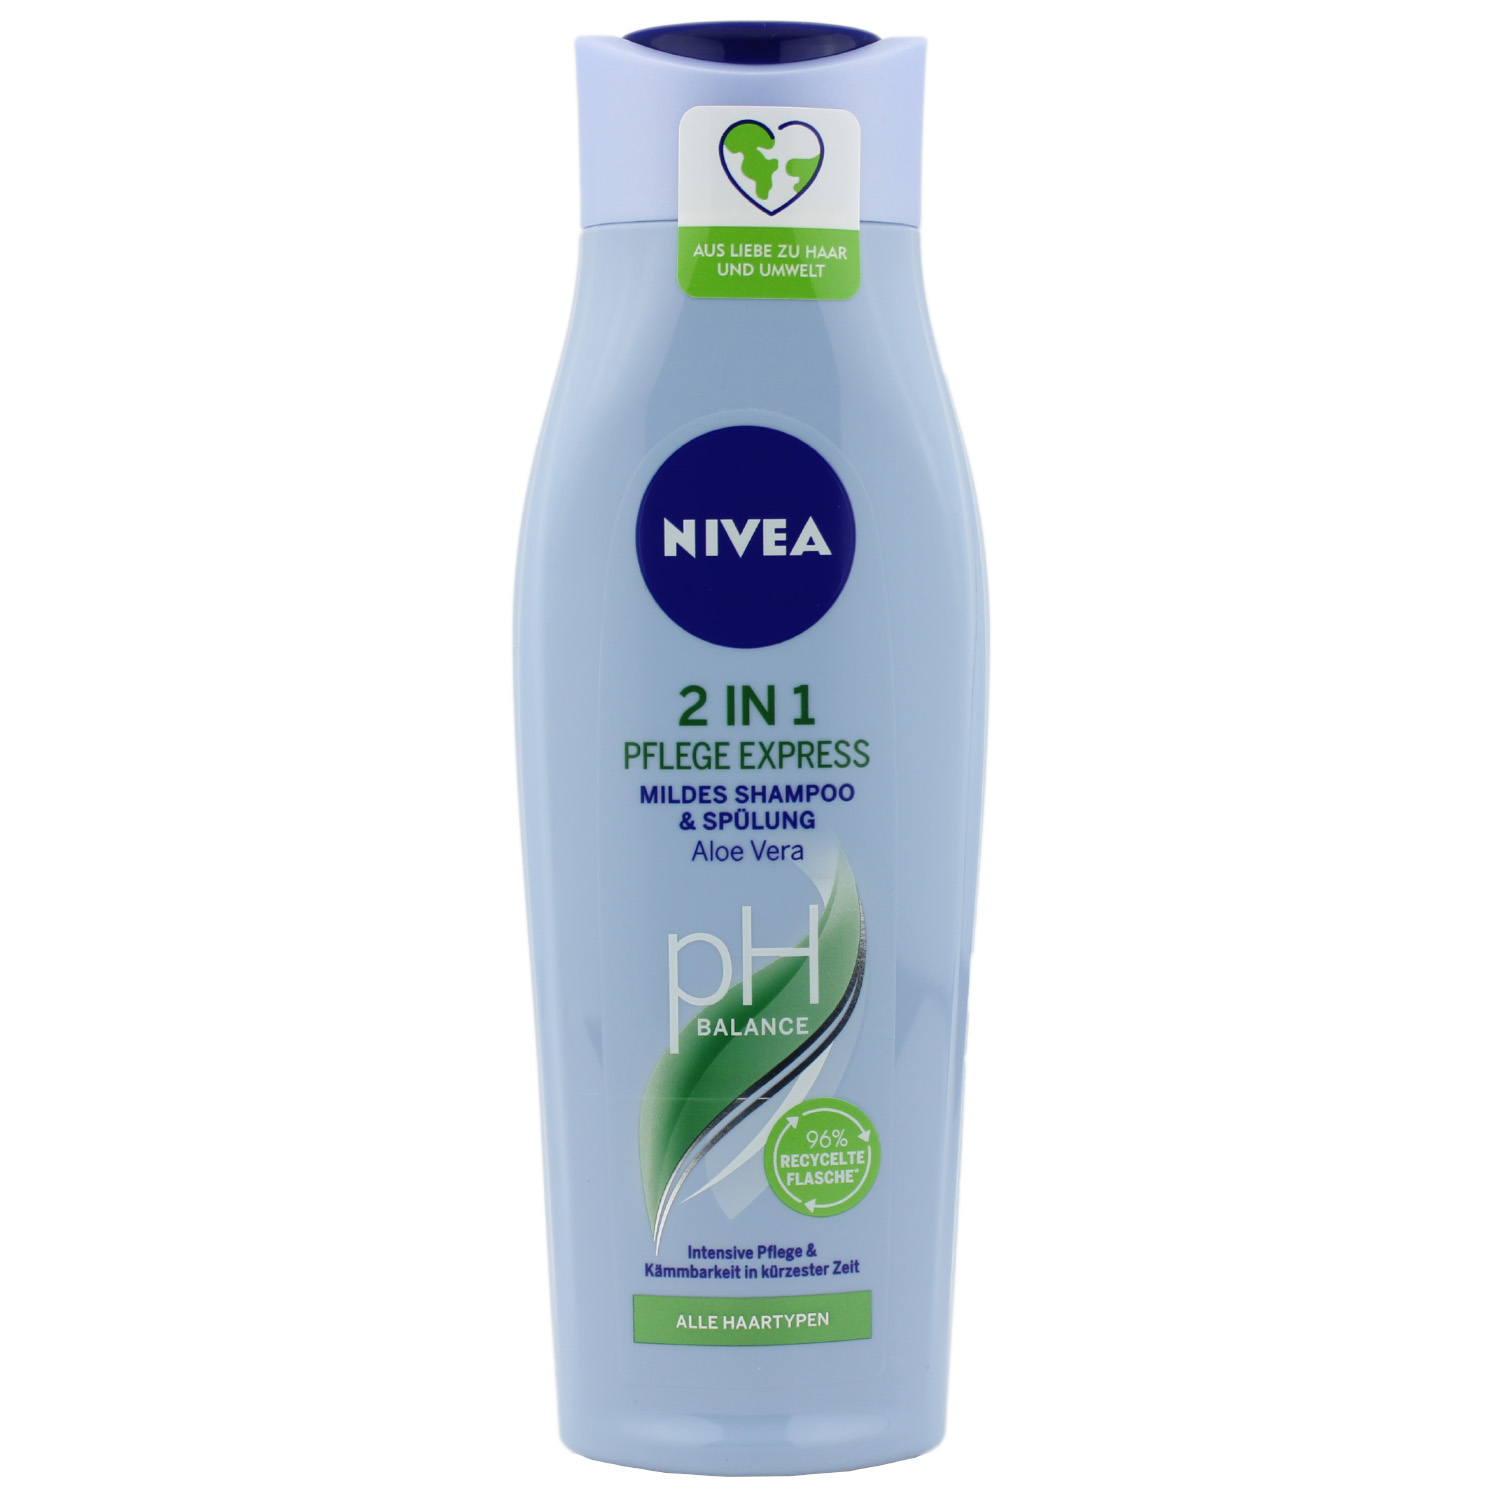 Nivea 2in1 Pflege Express pH-Balance Shampoo & Spülung  250ml